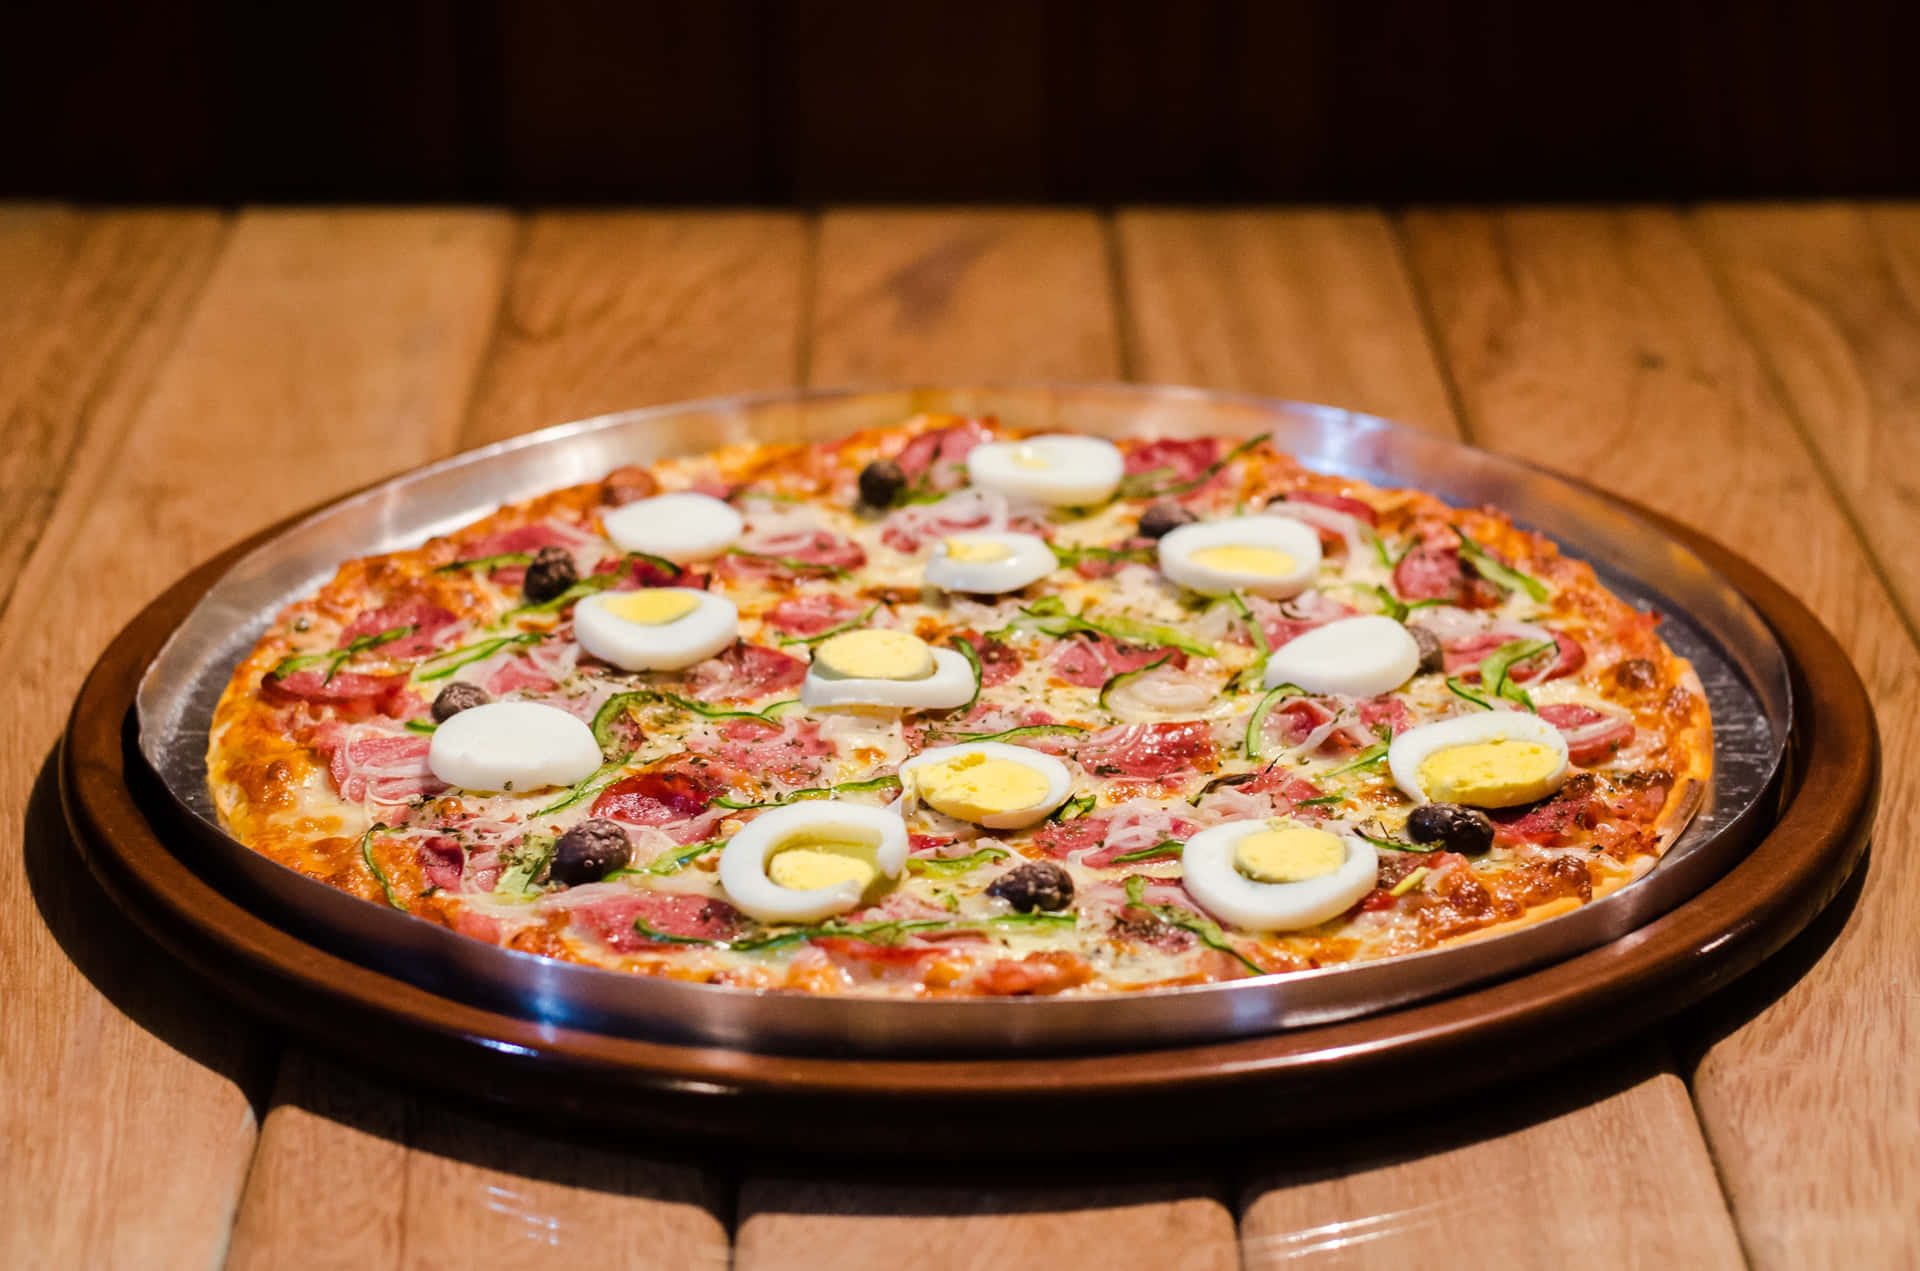 Enjoy the savoury, cheesy goodness of Pizza Hut